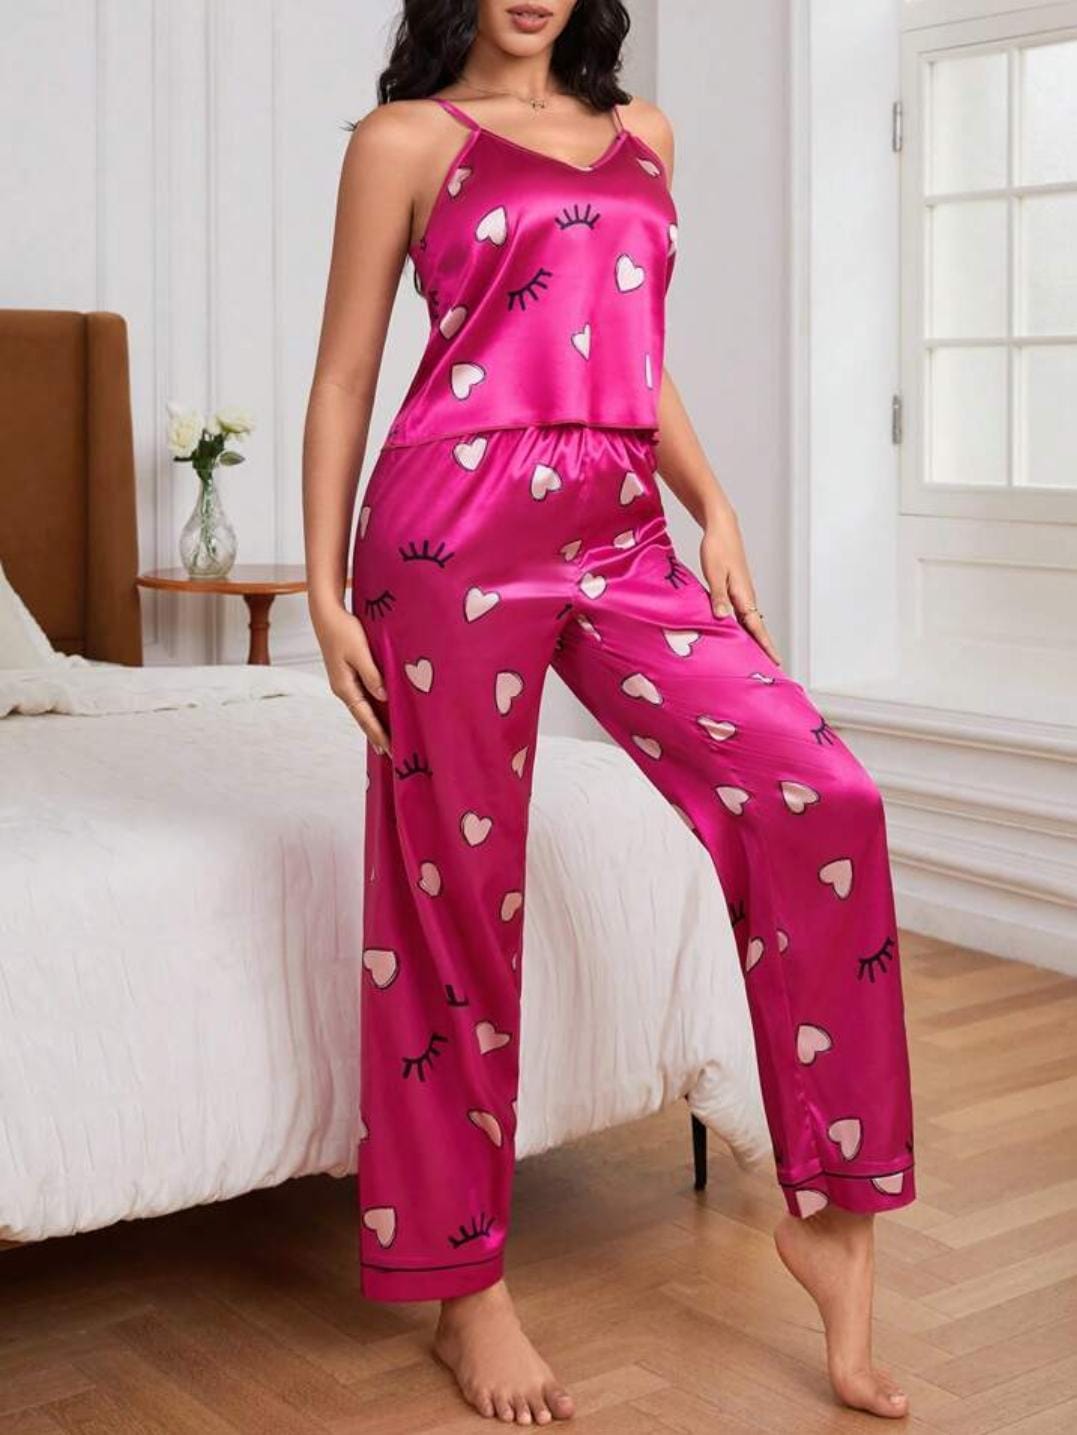 Sajiero Spice Ceder Strap Jumpsuit Printed Pink Hearst best quality summer sleeveless nightwear for women price in pakistan